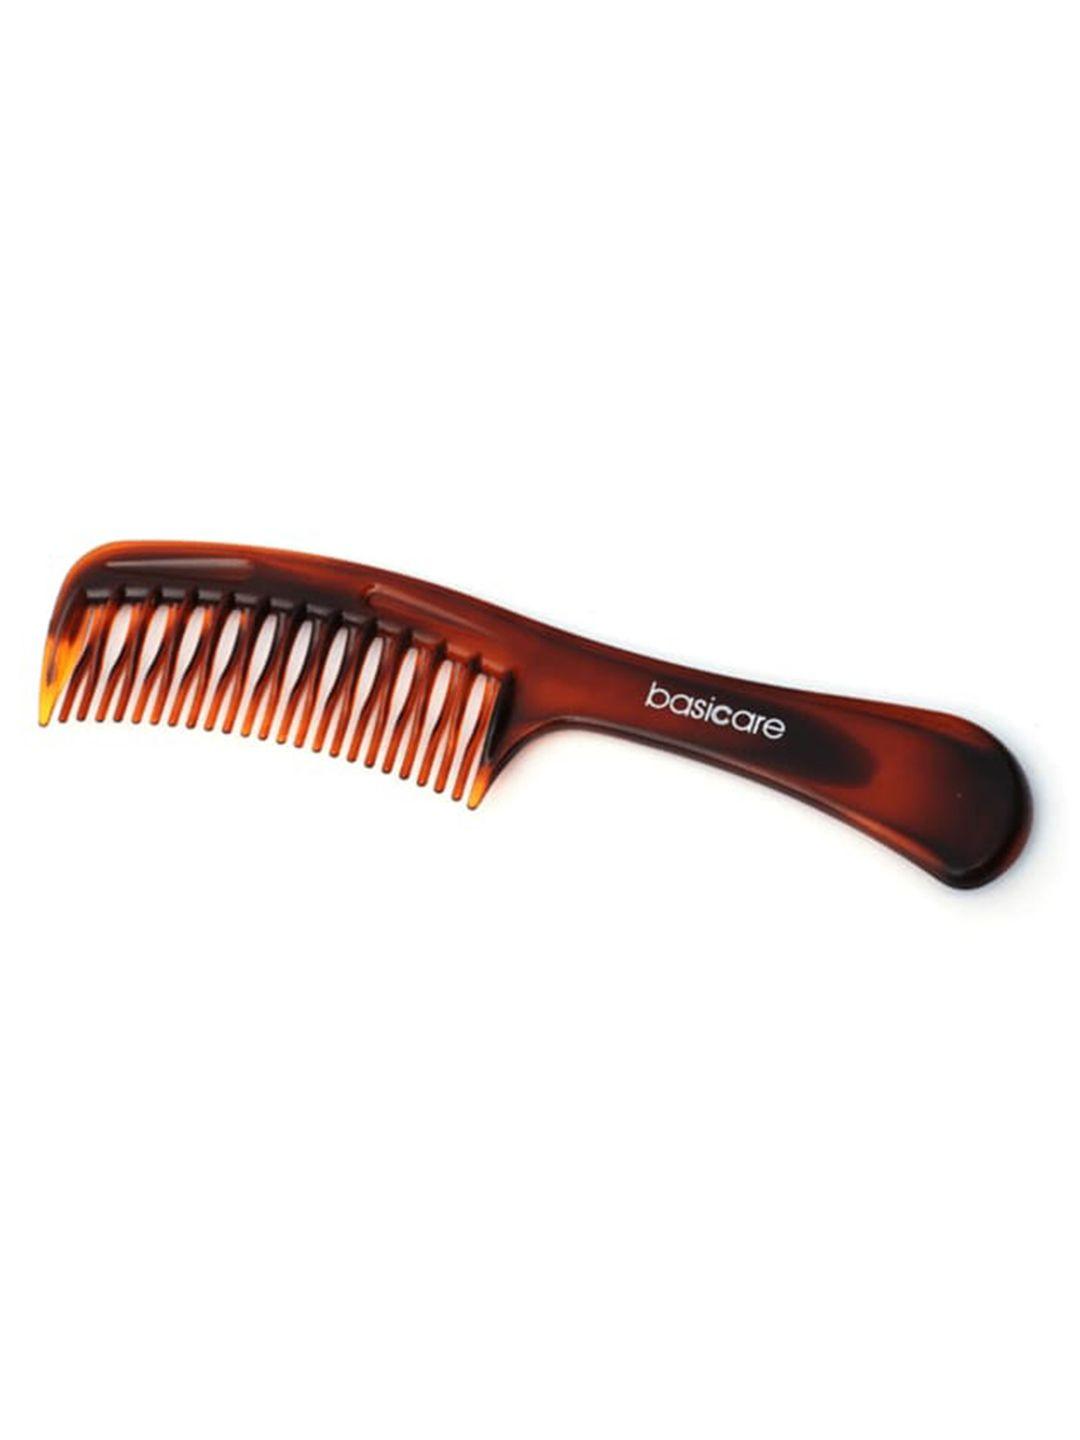 basicare unisex brown detangling comb